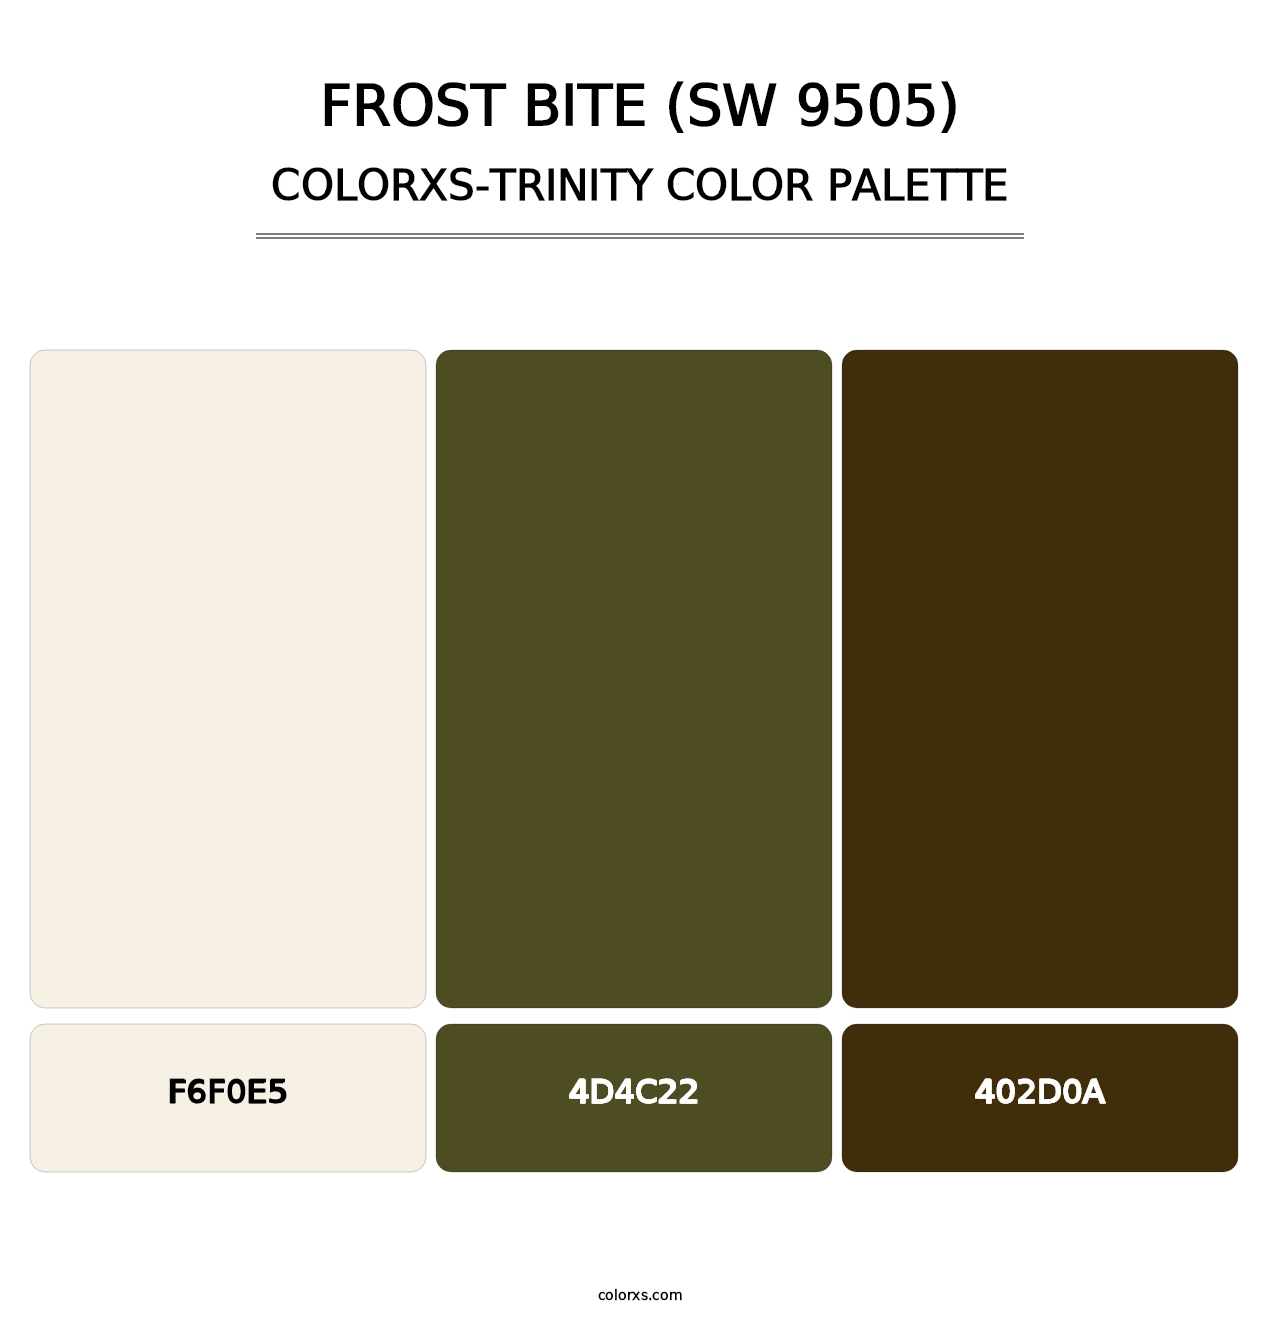 Frost Bite (SW 9505) - Colorxs Trinity Palette